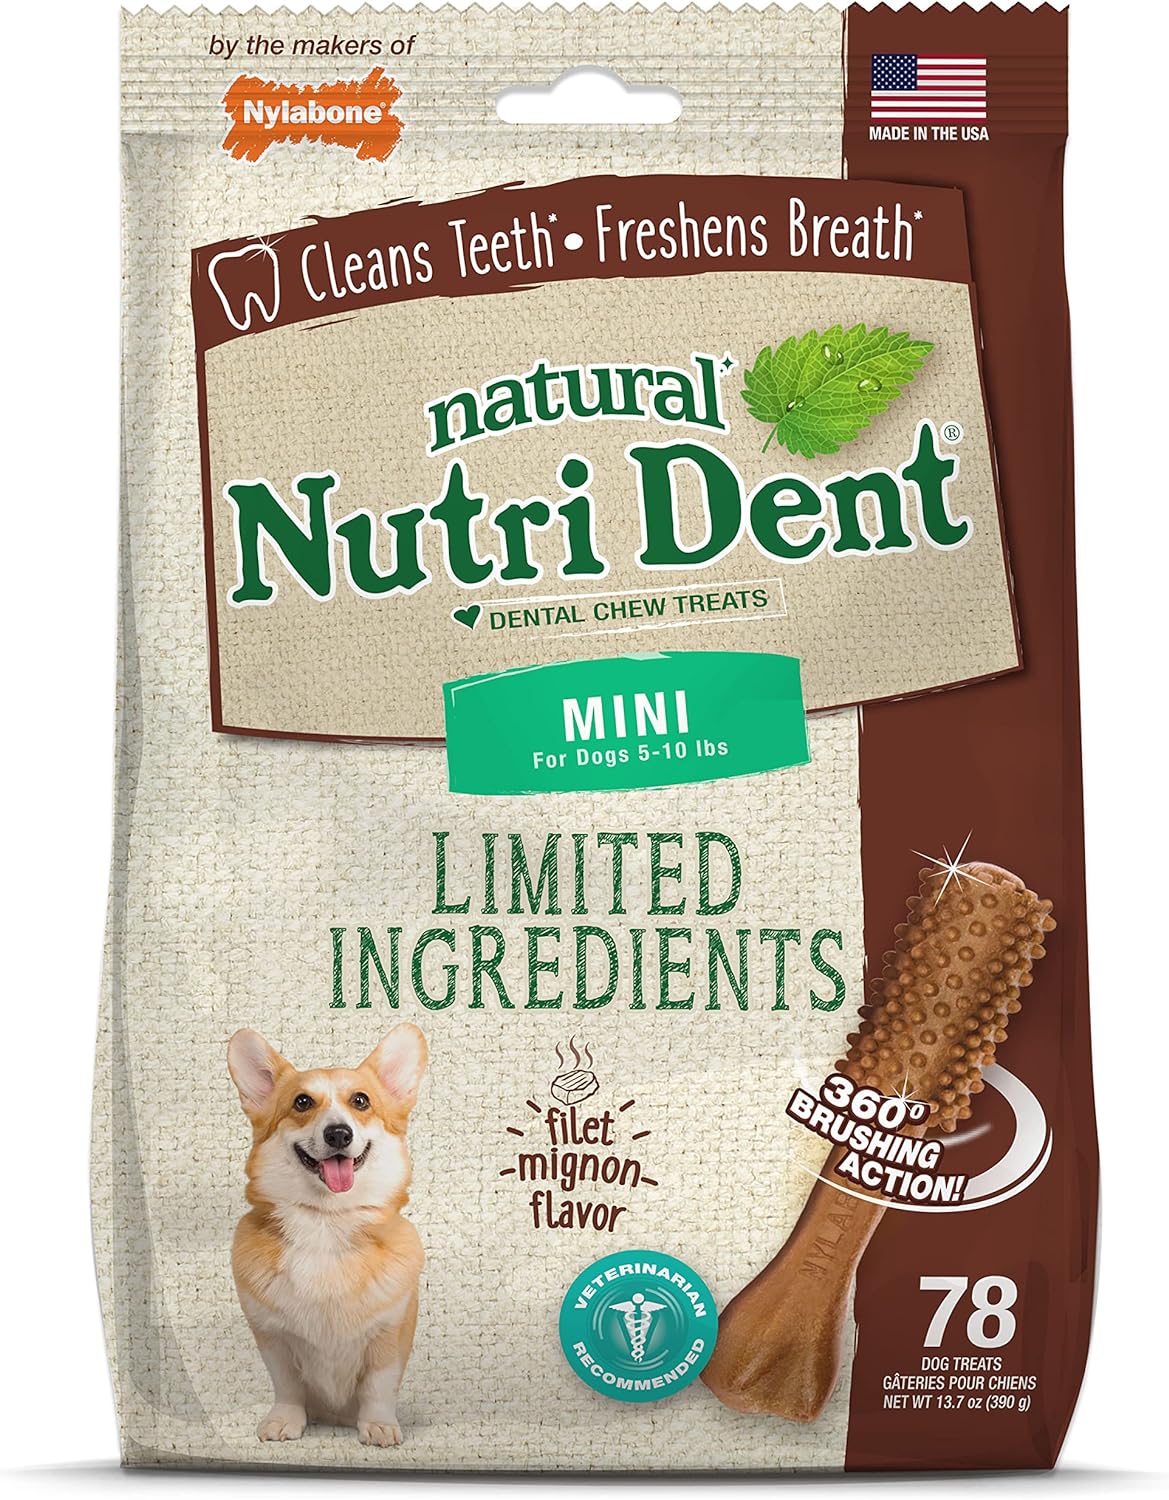 Nylabone Nutri Dent Dog Dental Treats - Natural Dog Teeth Cleaning & Breath Freshener - Dental Treats for Dogs - Filet Mignon Flavor, Mini (78 Count)